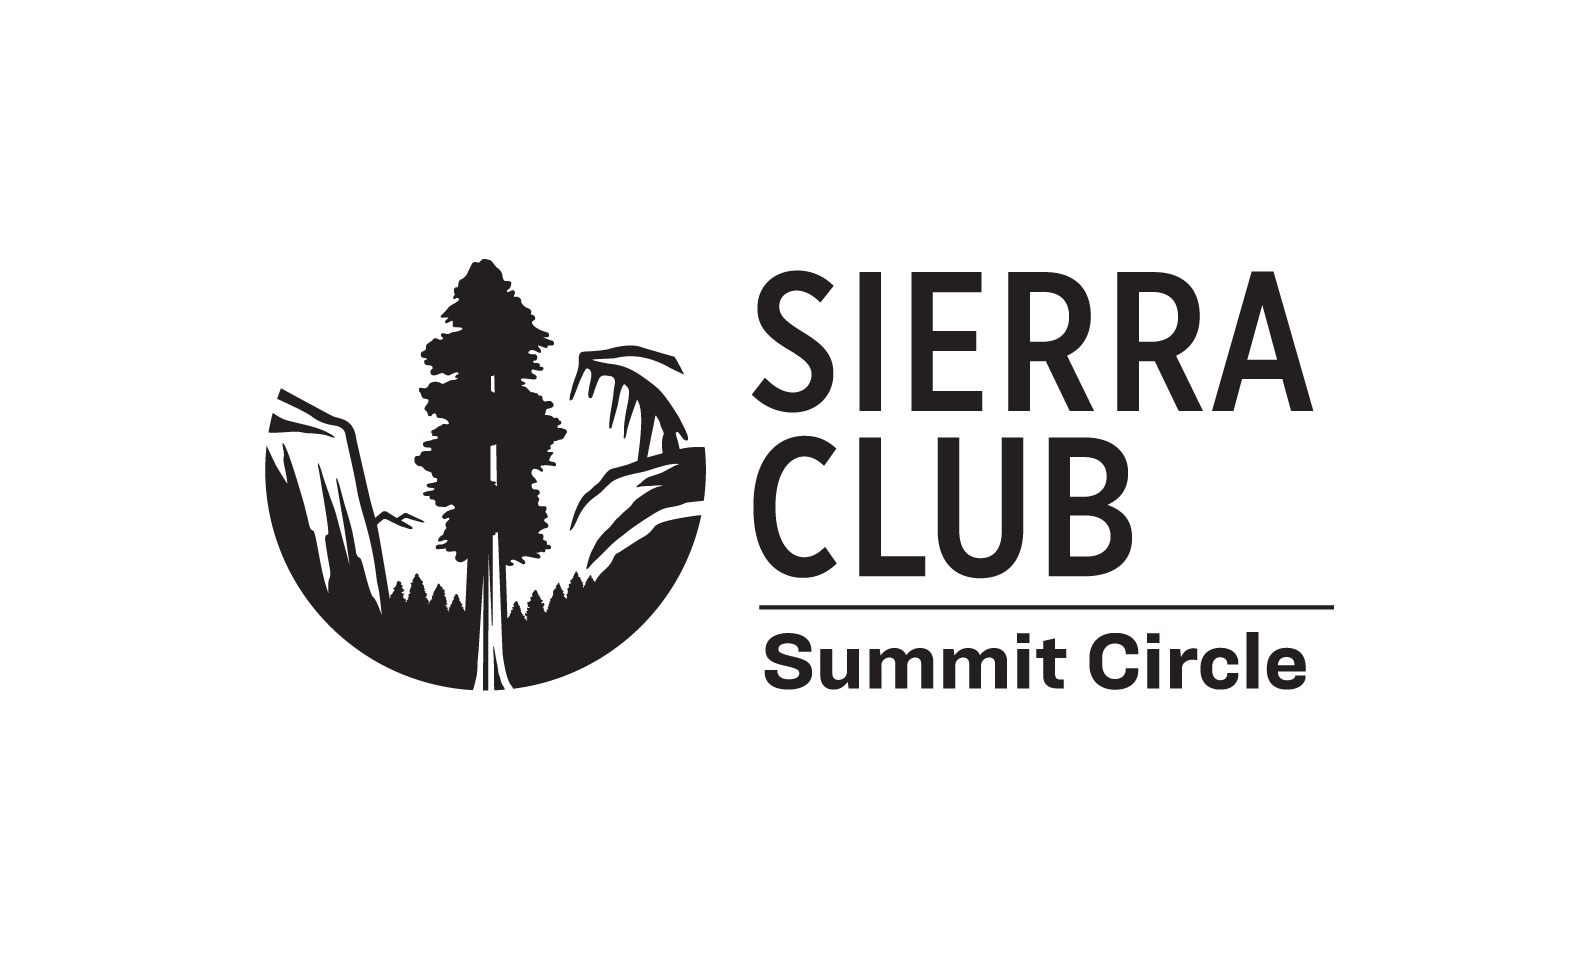 Summit Circle